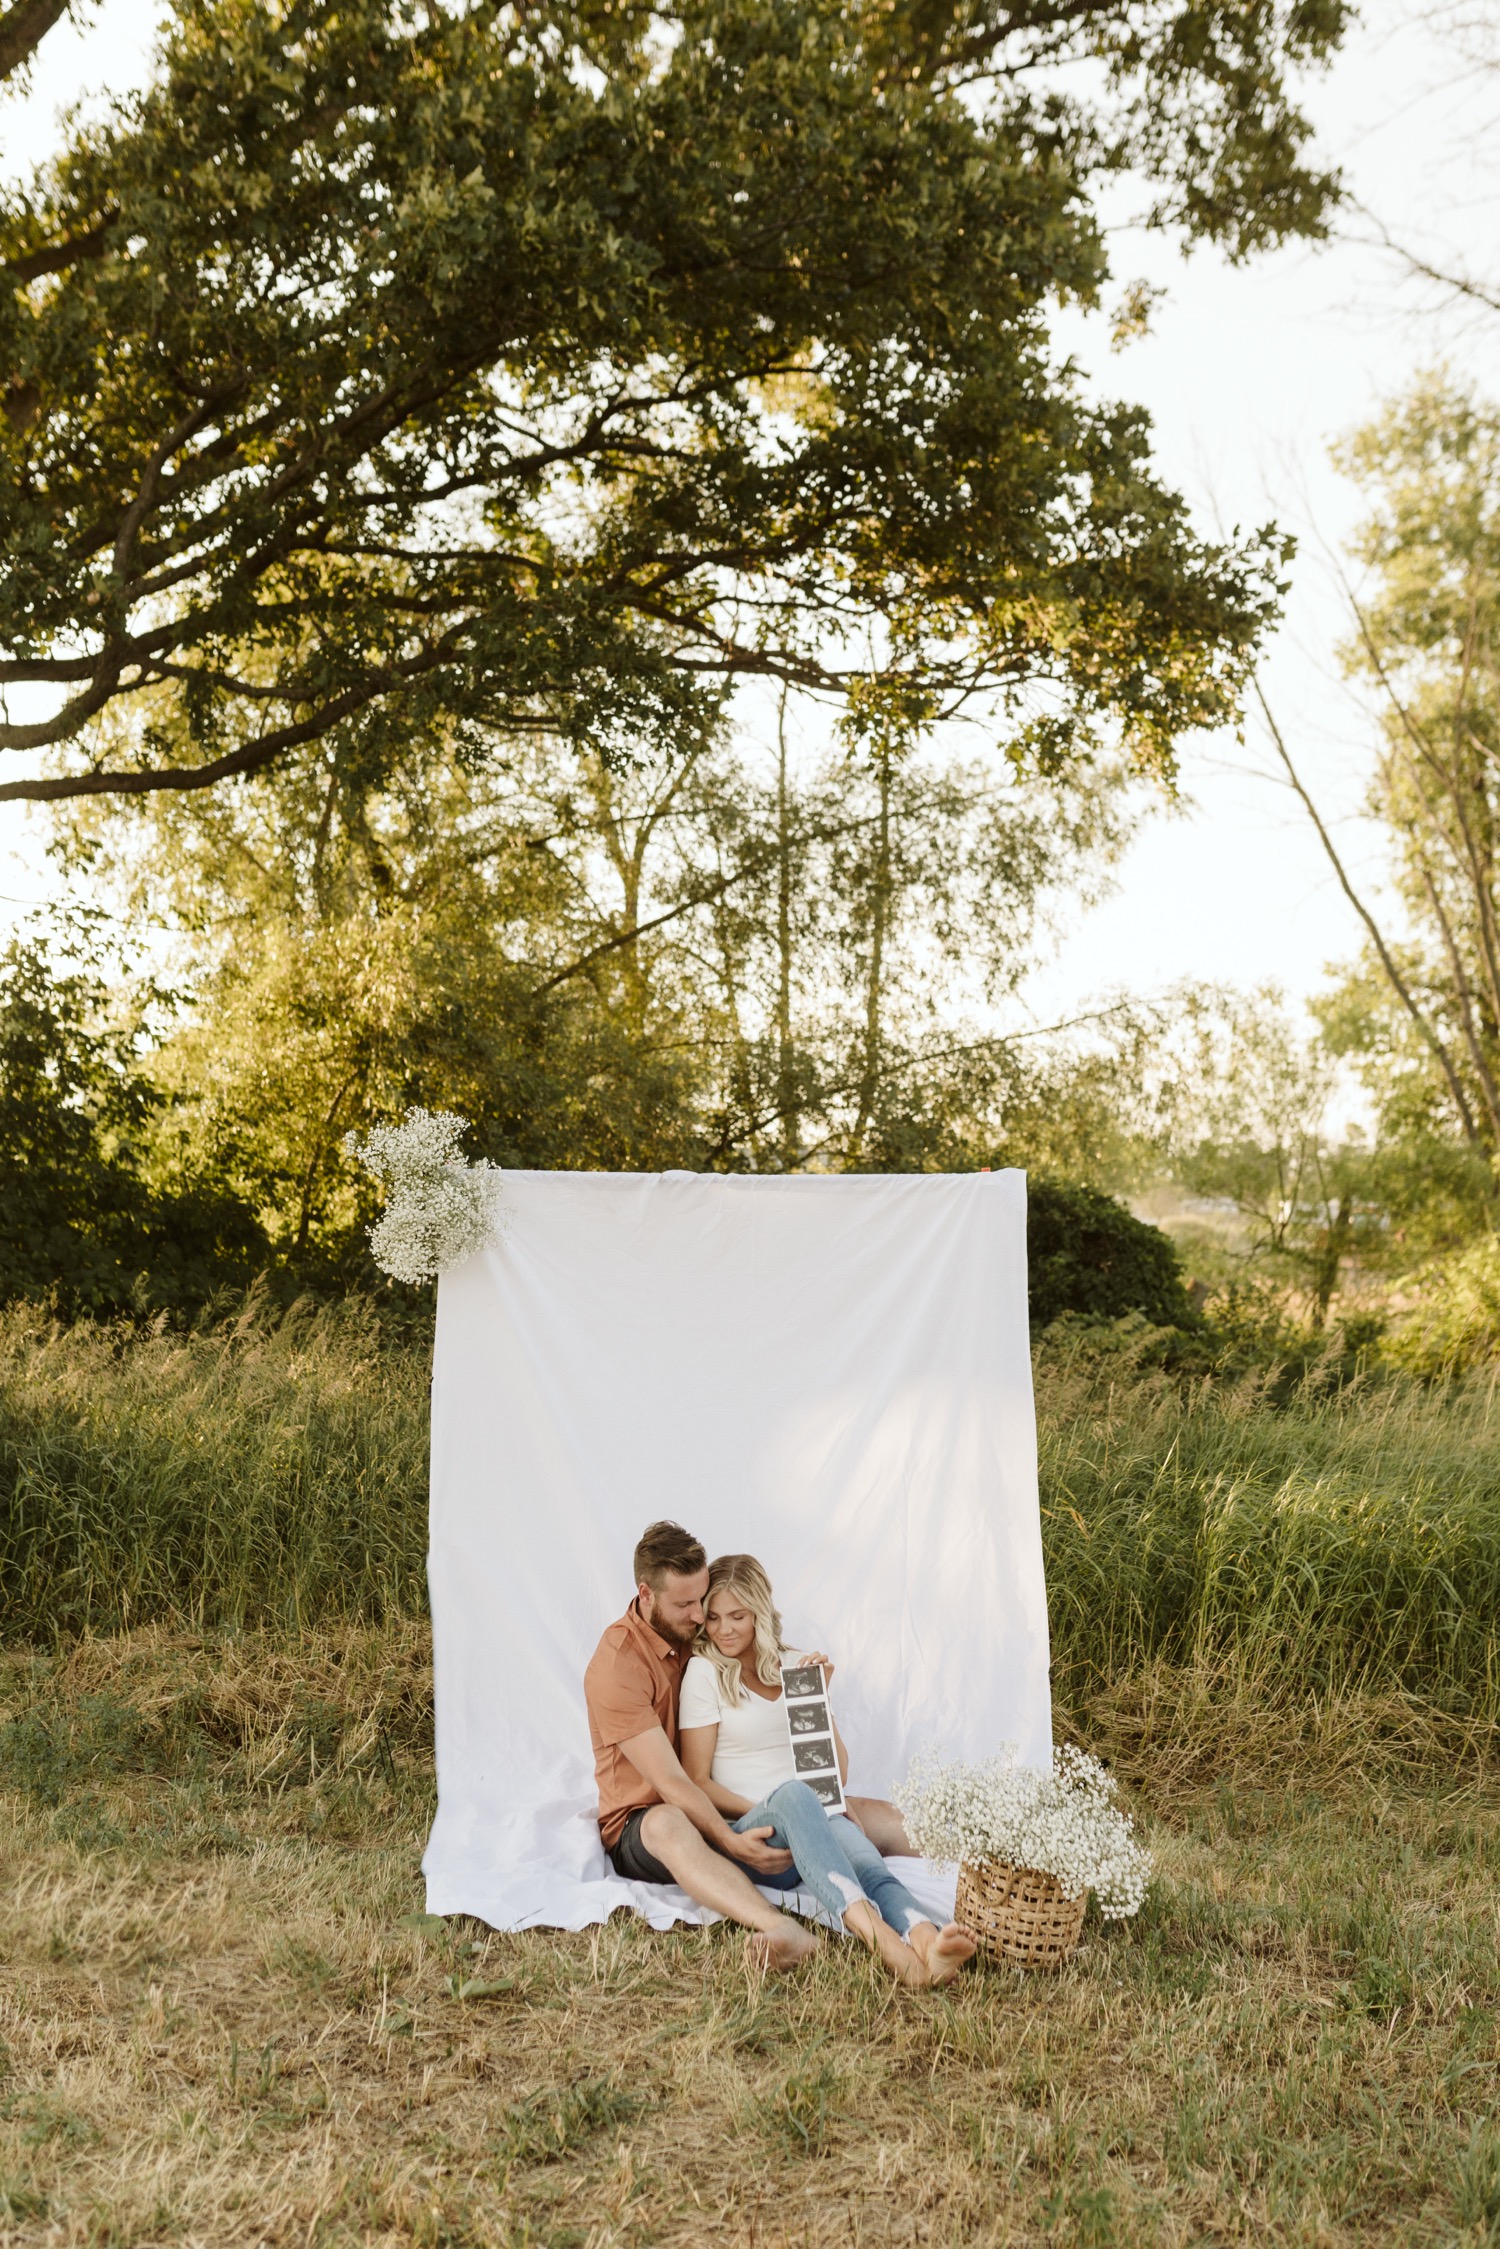 https://content1.getnarrativeapp.com/static/9930f52d-173f-4ab5-bca0-8fa1c9311761/Jasmine-Michael%E2%80%99s-Summer-Baby-Announcement-session-Muskoka-Ontario-Intimate-Wedding-Elopement-Traveling-Photographer-maddie-mellott-photography-Couple-session.jpg?w=1500